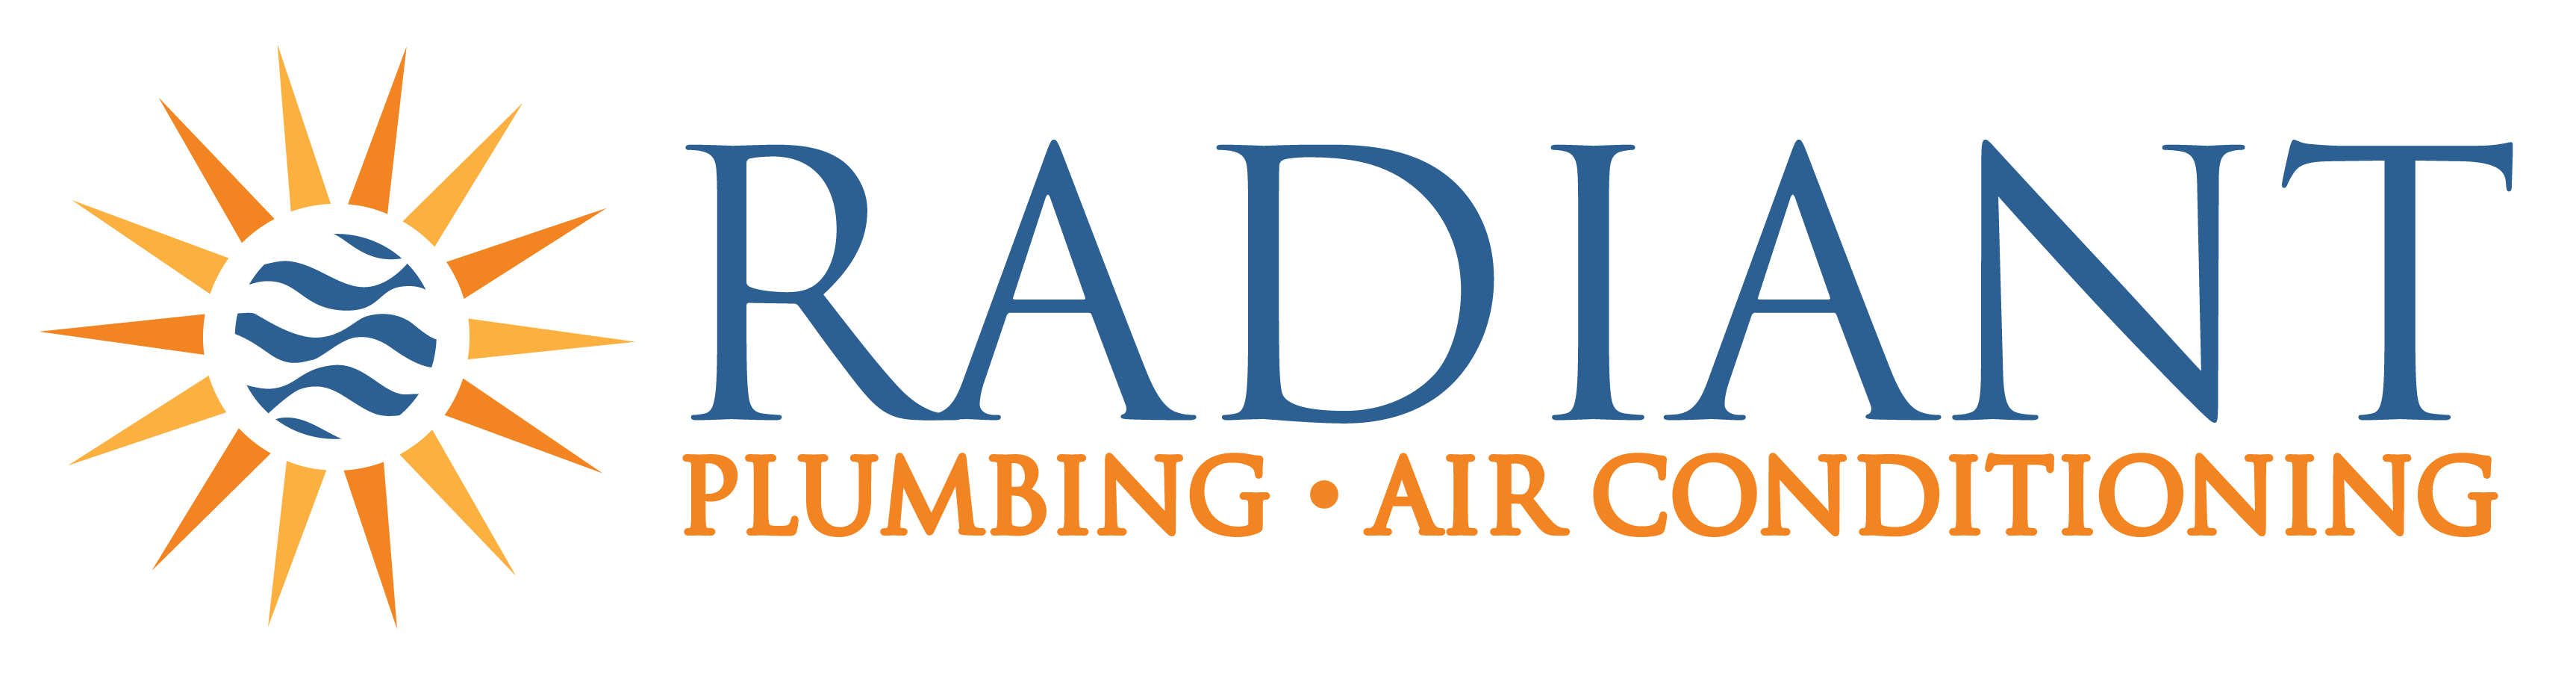 Radiant Plumbing & Air Conditioning Logo